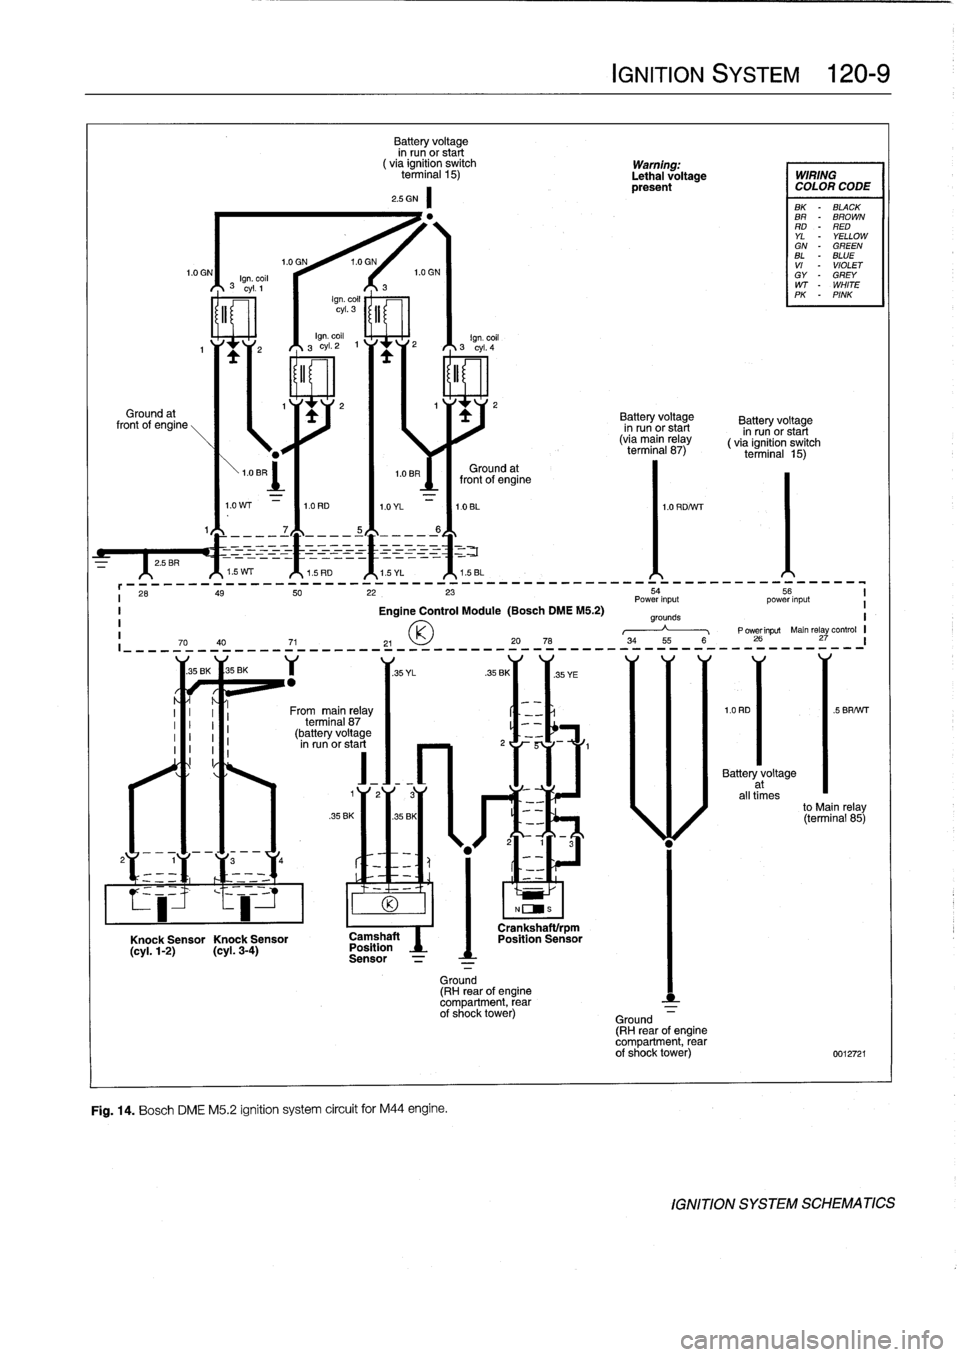 BMW 325i 1992 E36 Service Manual 
^1
.5WT
^1
.5RD
^1
.5YL
^1
.5BL
r

	

--__

	

____-

	

__-_

	

___-_

	

-___-_____--__--

	

-____-___

	

____-
i
26
g
5022
23

	

54

	

5

I

	

Power
input

	

power
input
I

	

Engine
Contro